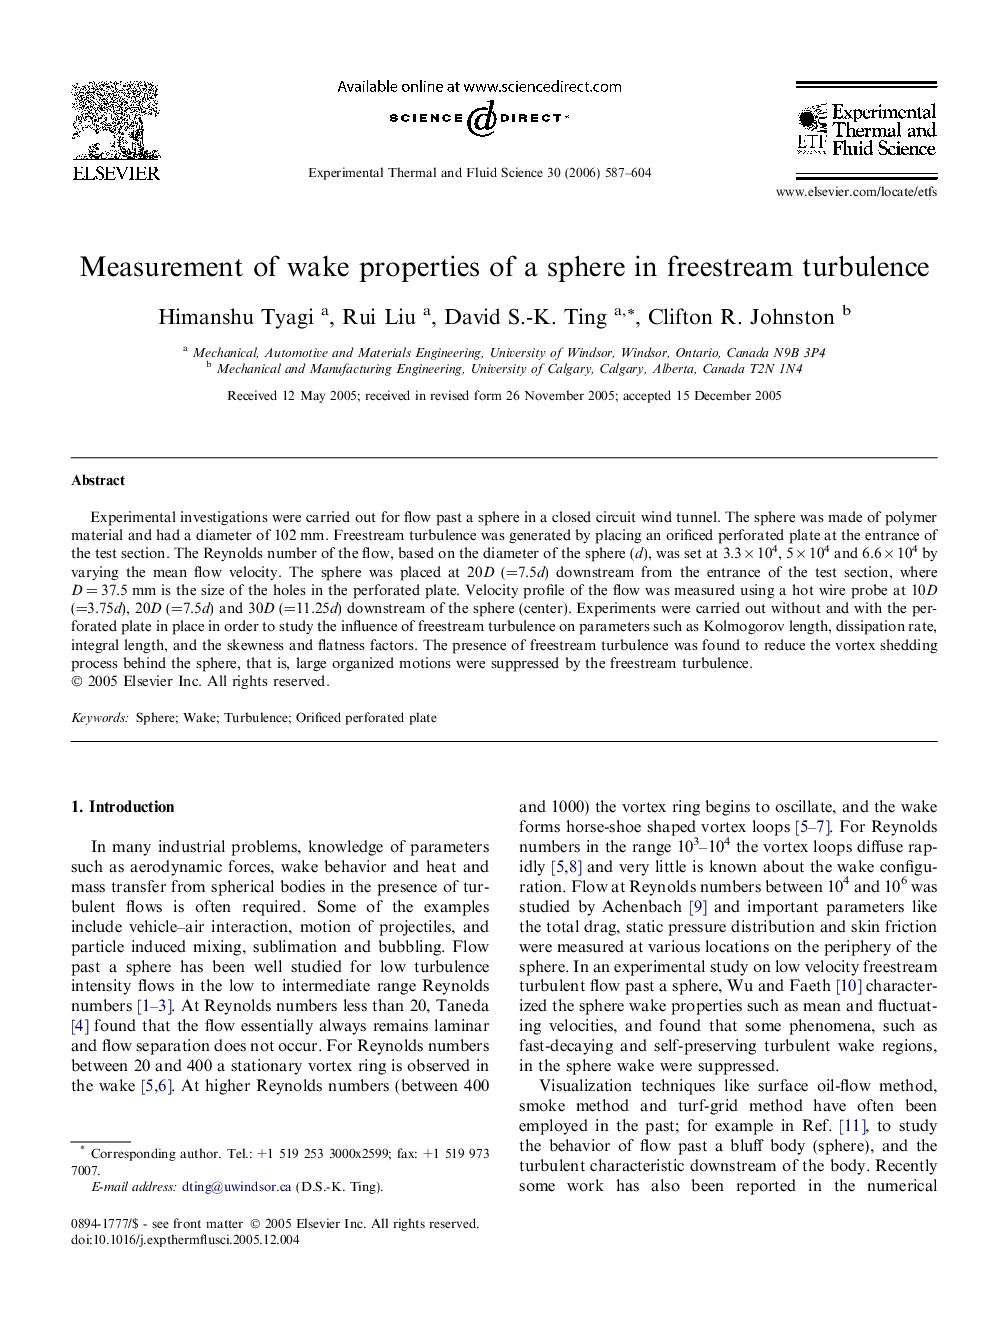 Measurement of wake properties of a sphere in freestream turbulence